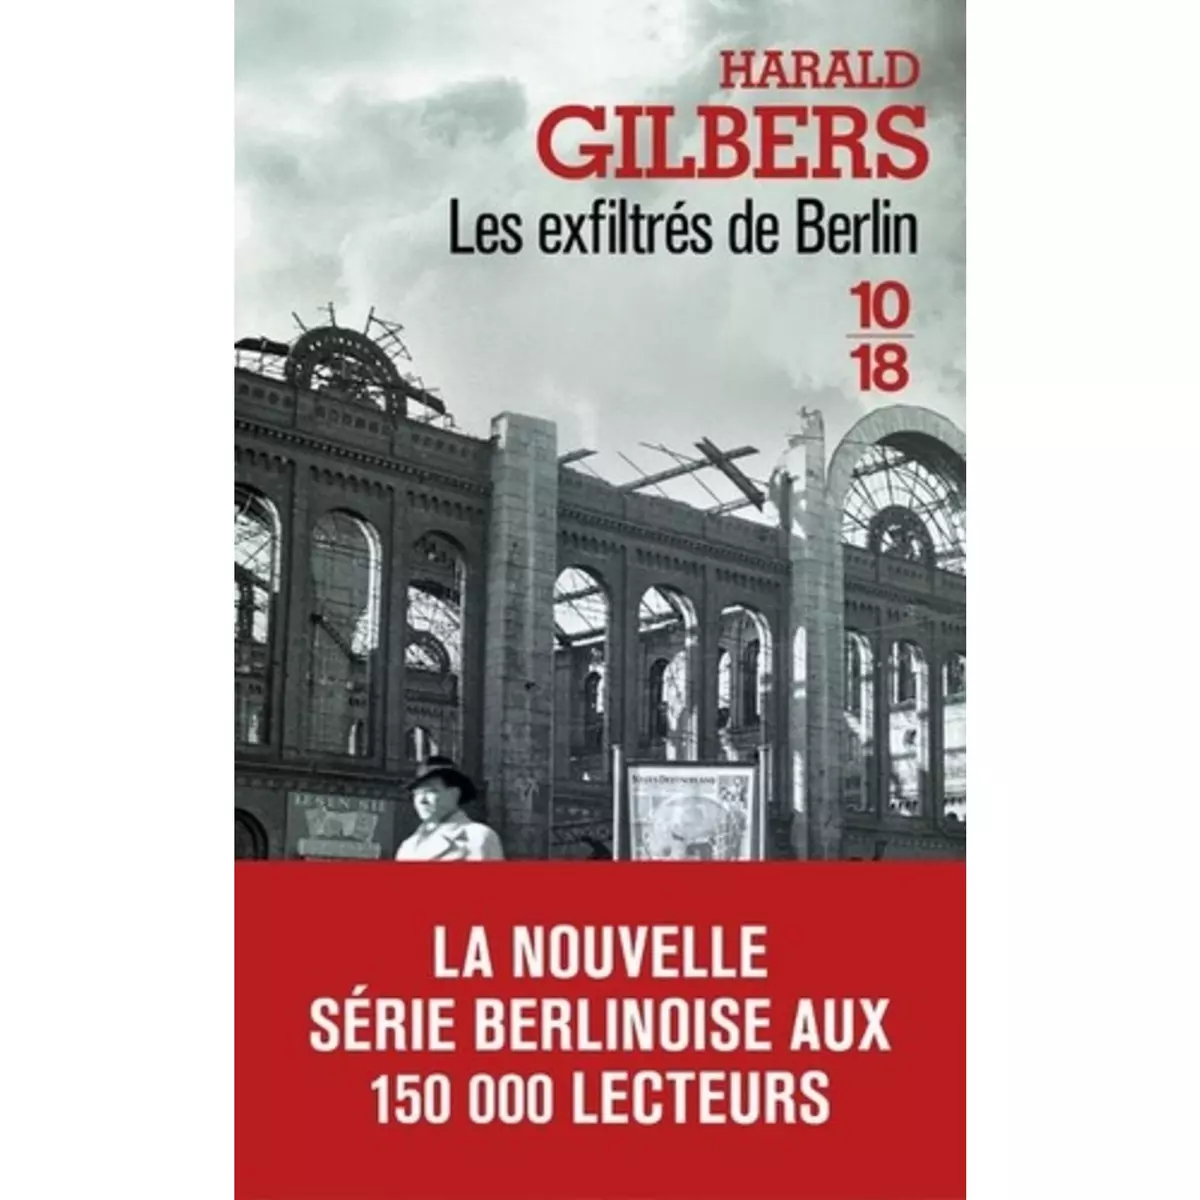  LES EXFILTRES DE BERLIN, Gilbers Harald